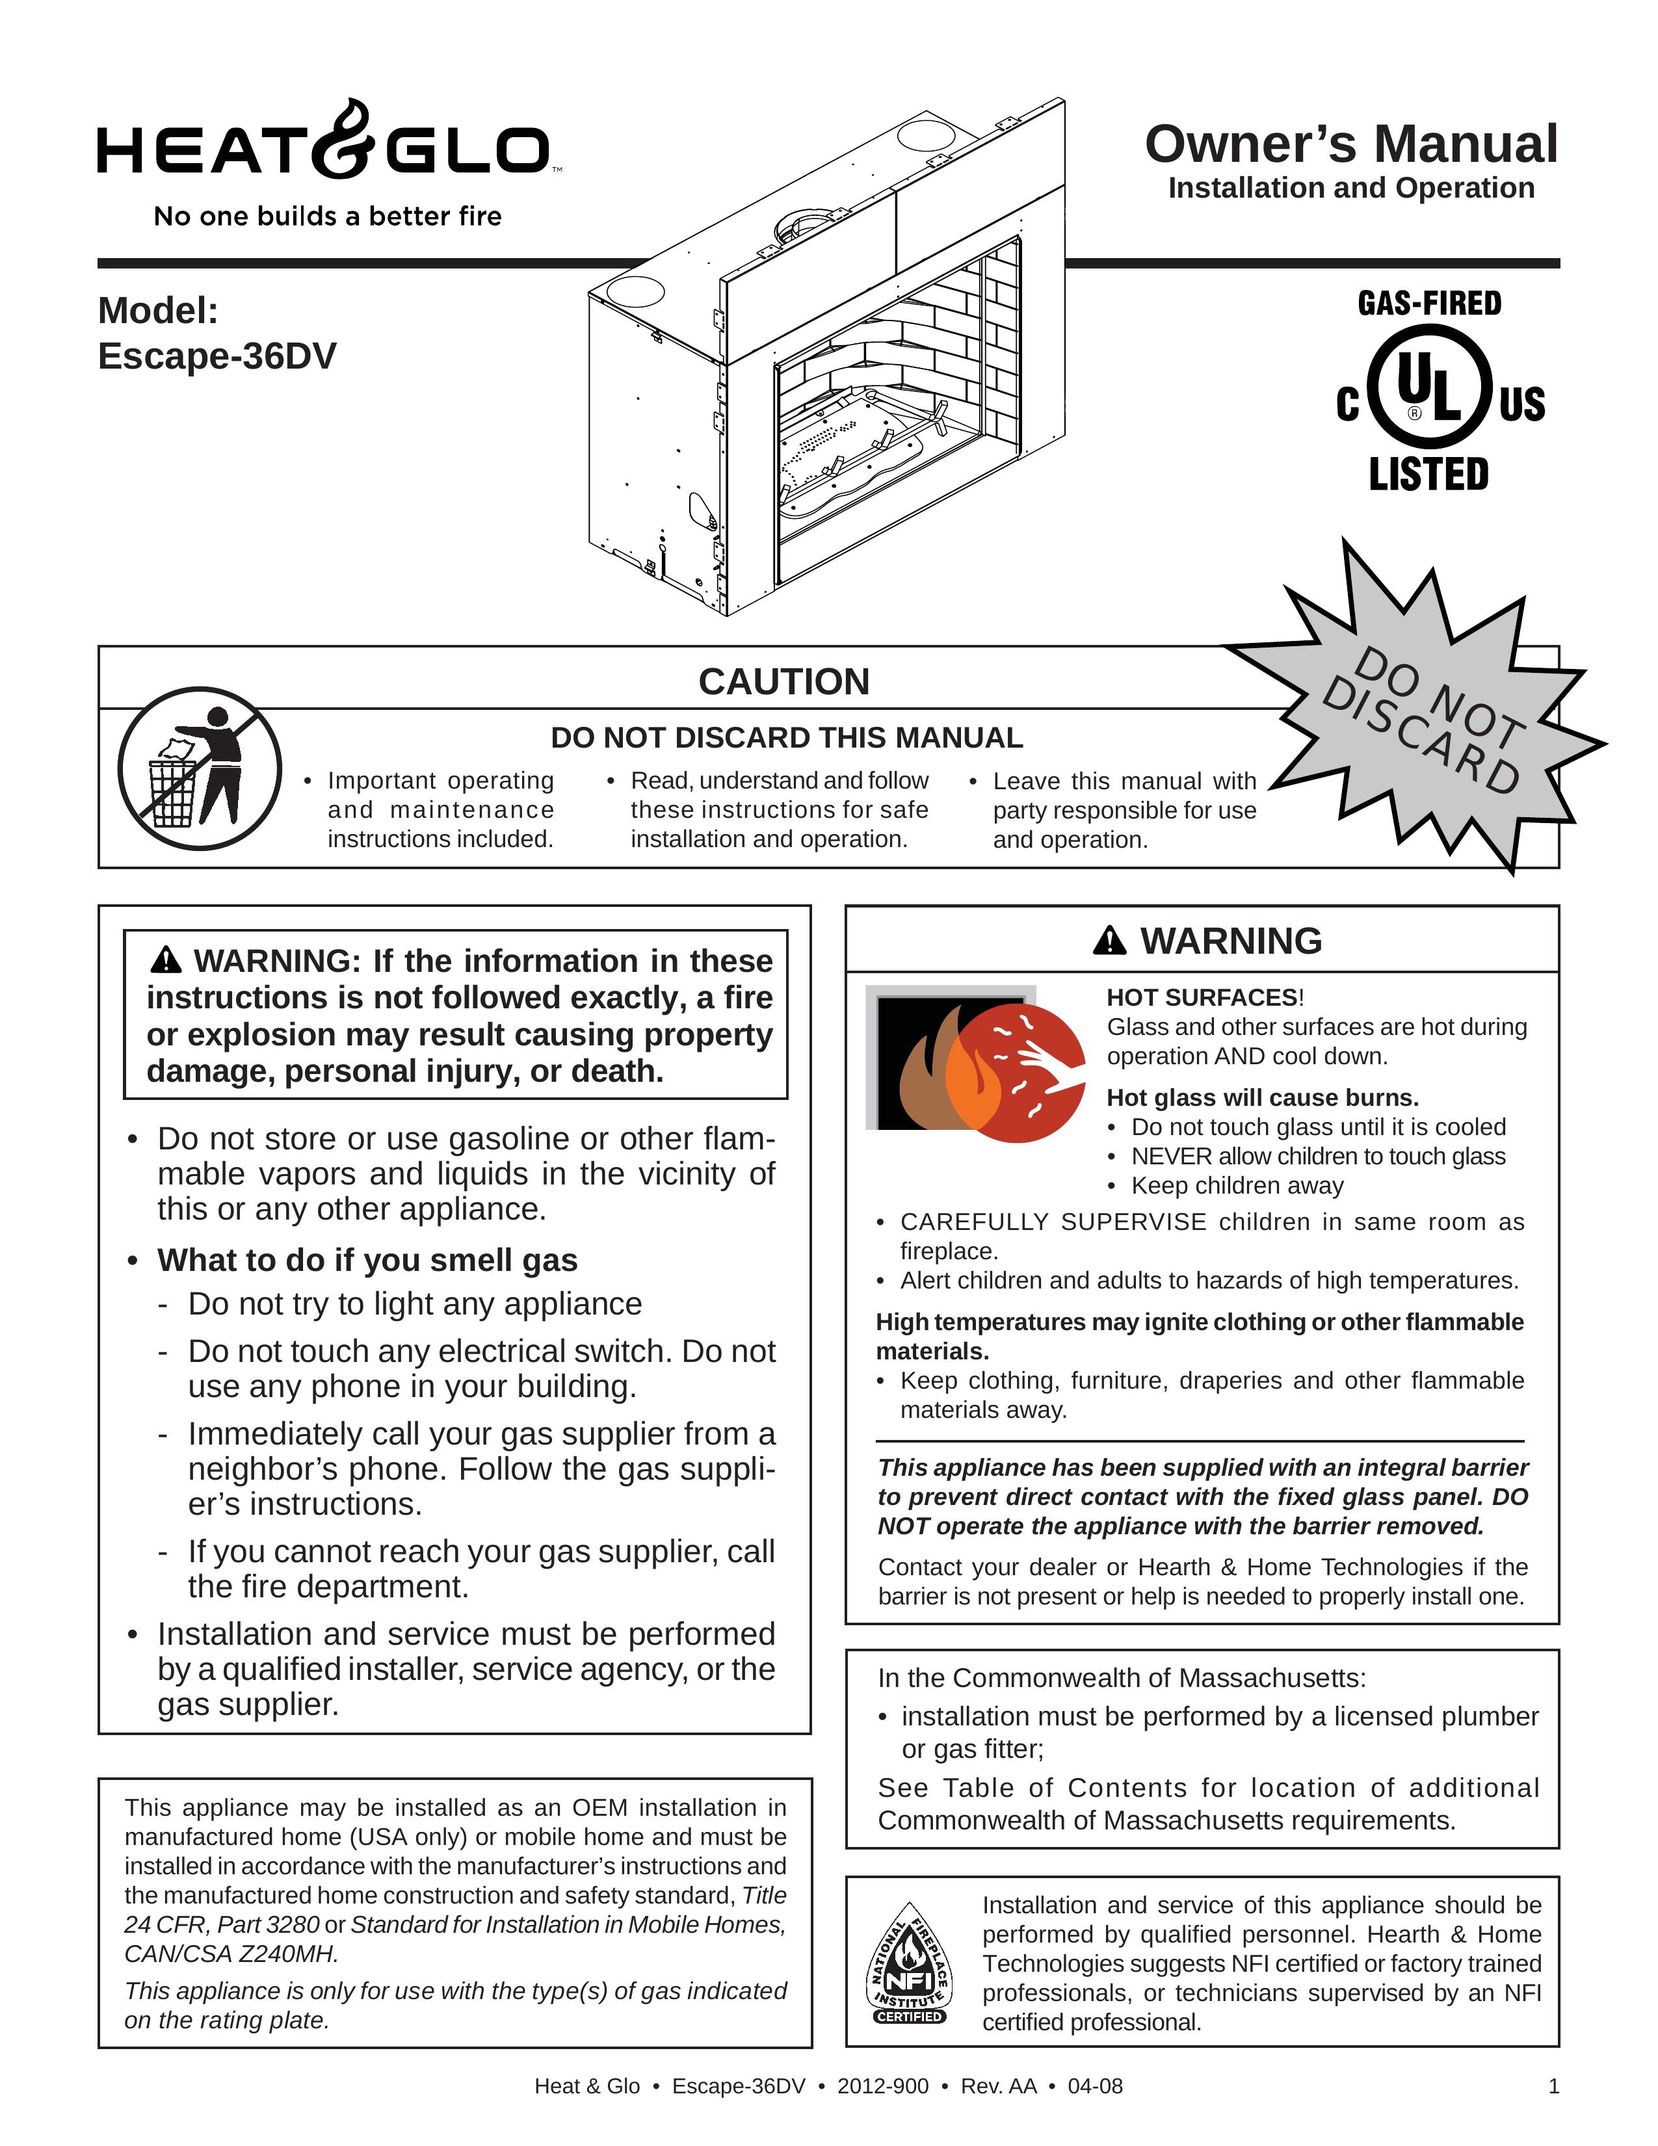 Heat & Glo LifeStyle 36DV Indoor Fireplace User Manual